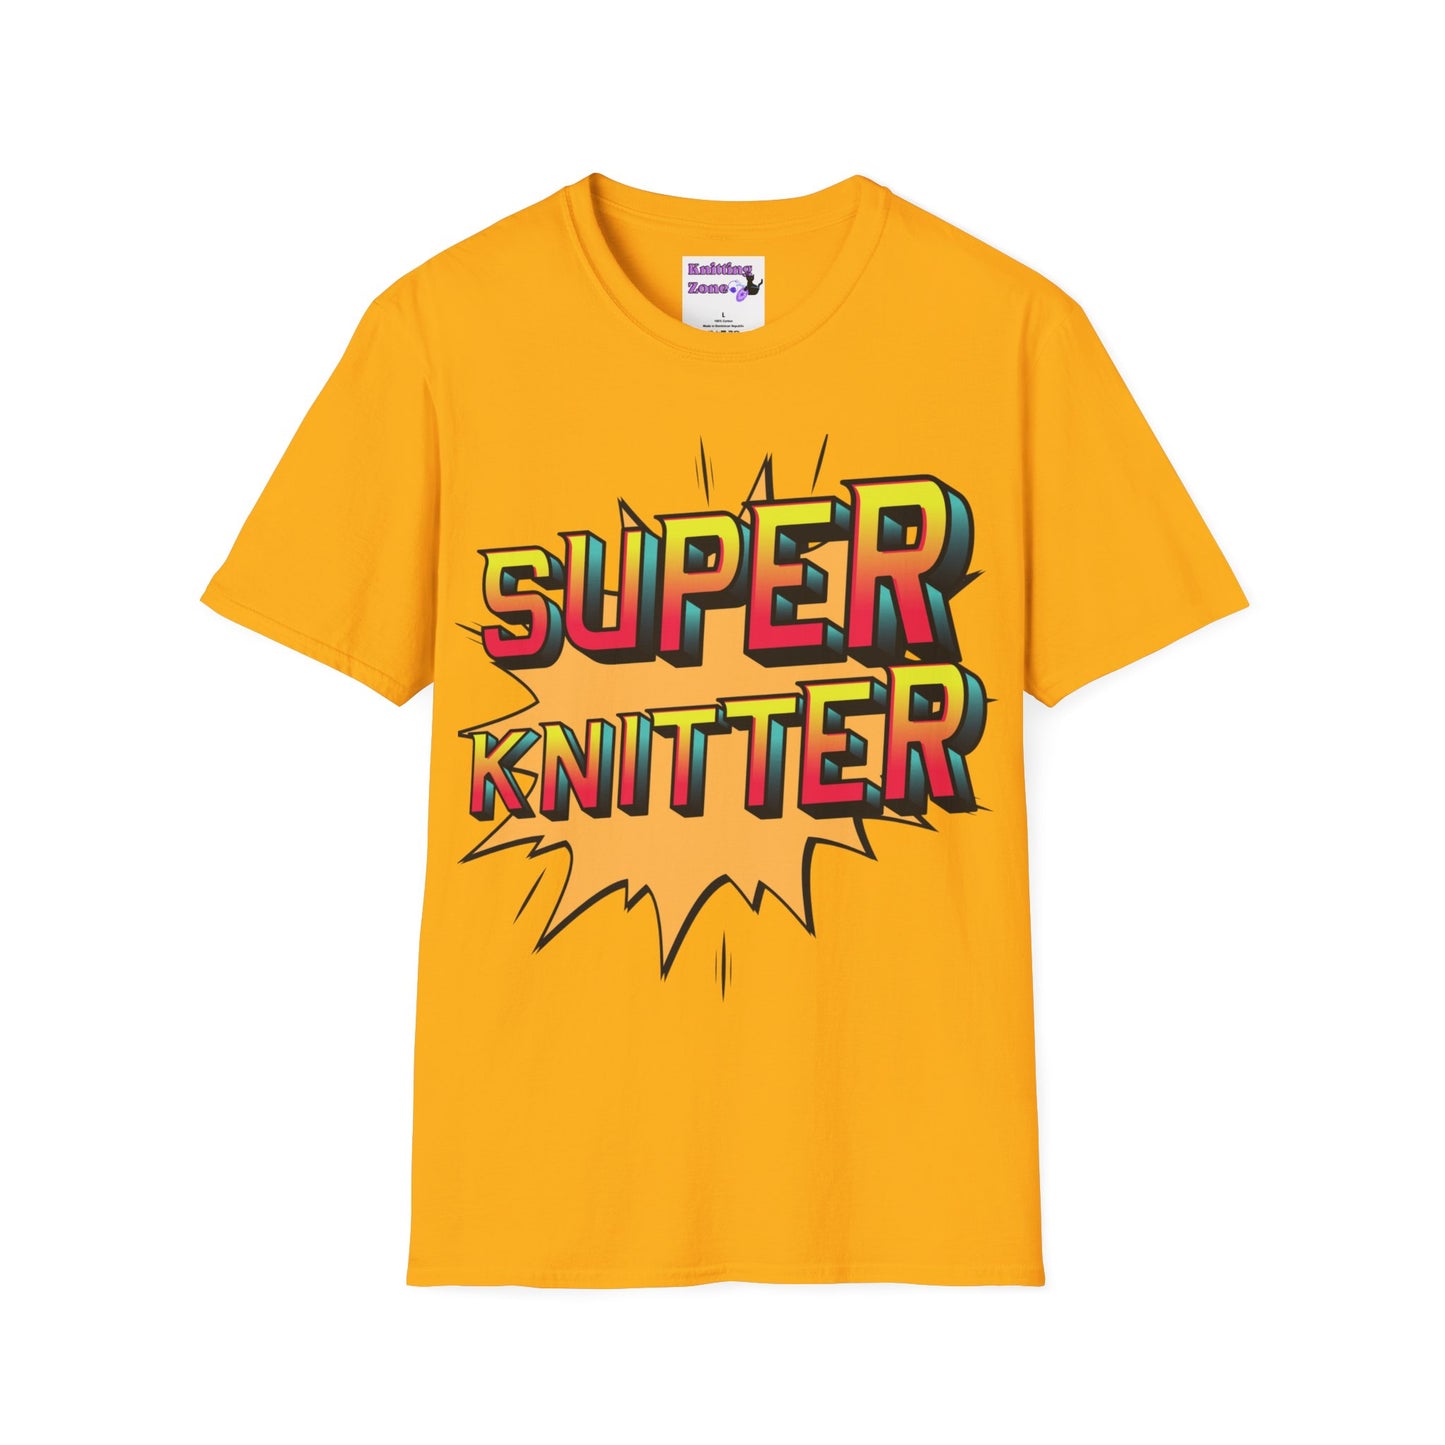 Super Knitter Unisex T Shirt